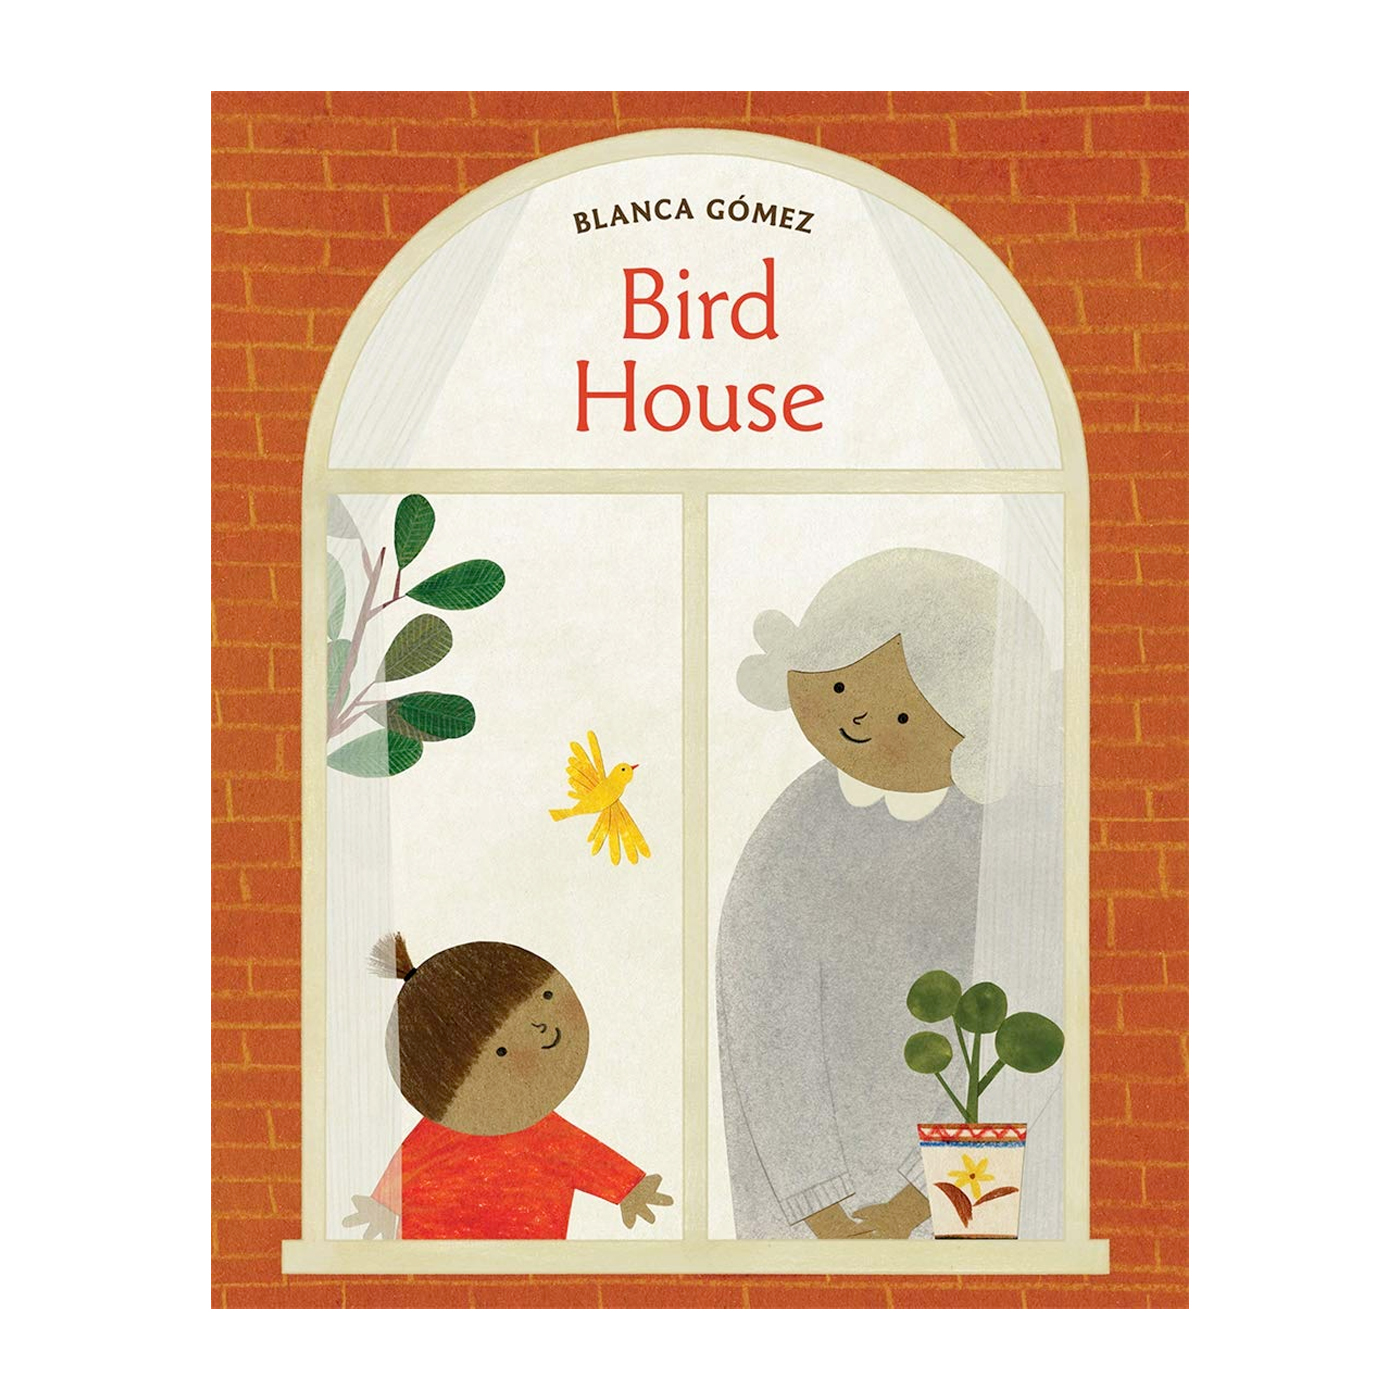 ABRAMS BOOKS Bird House